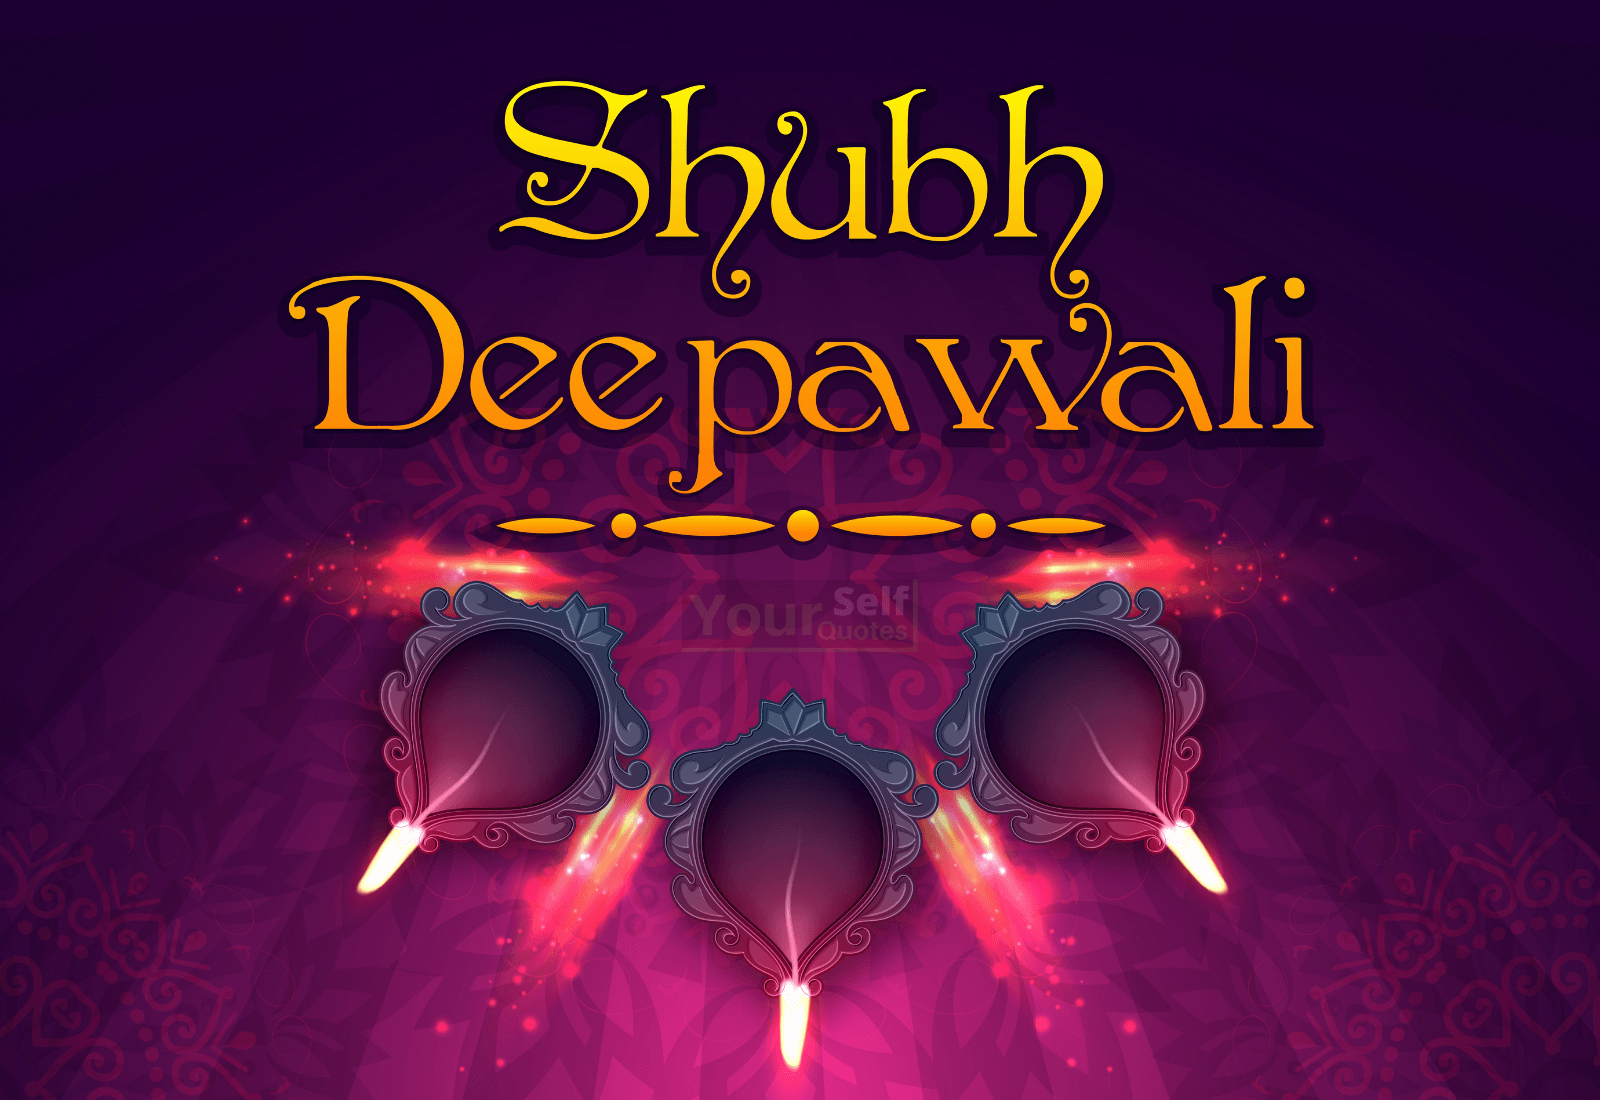 Shubh Diwali Images - Poster - HD Wallpaper 